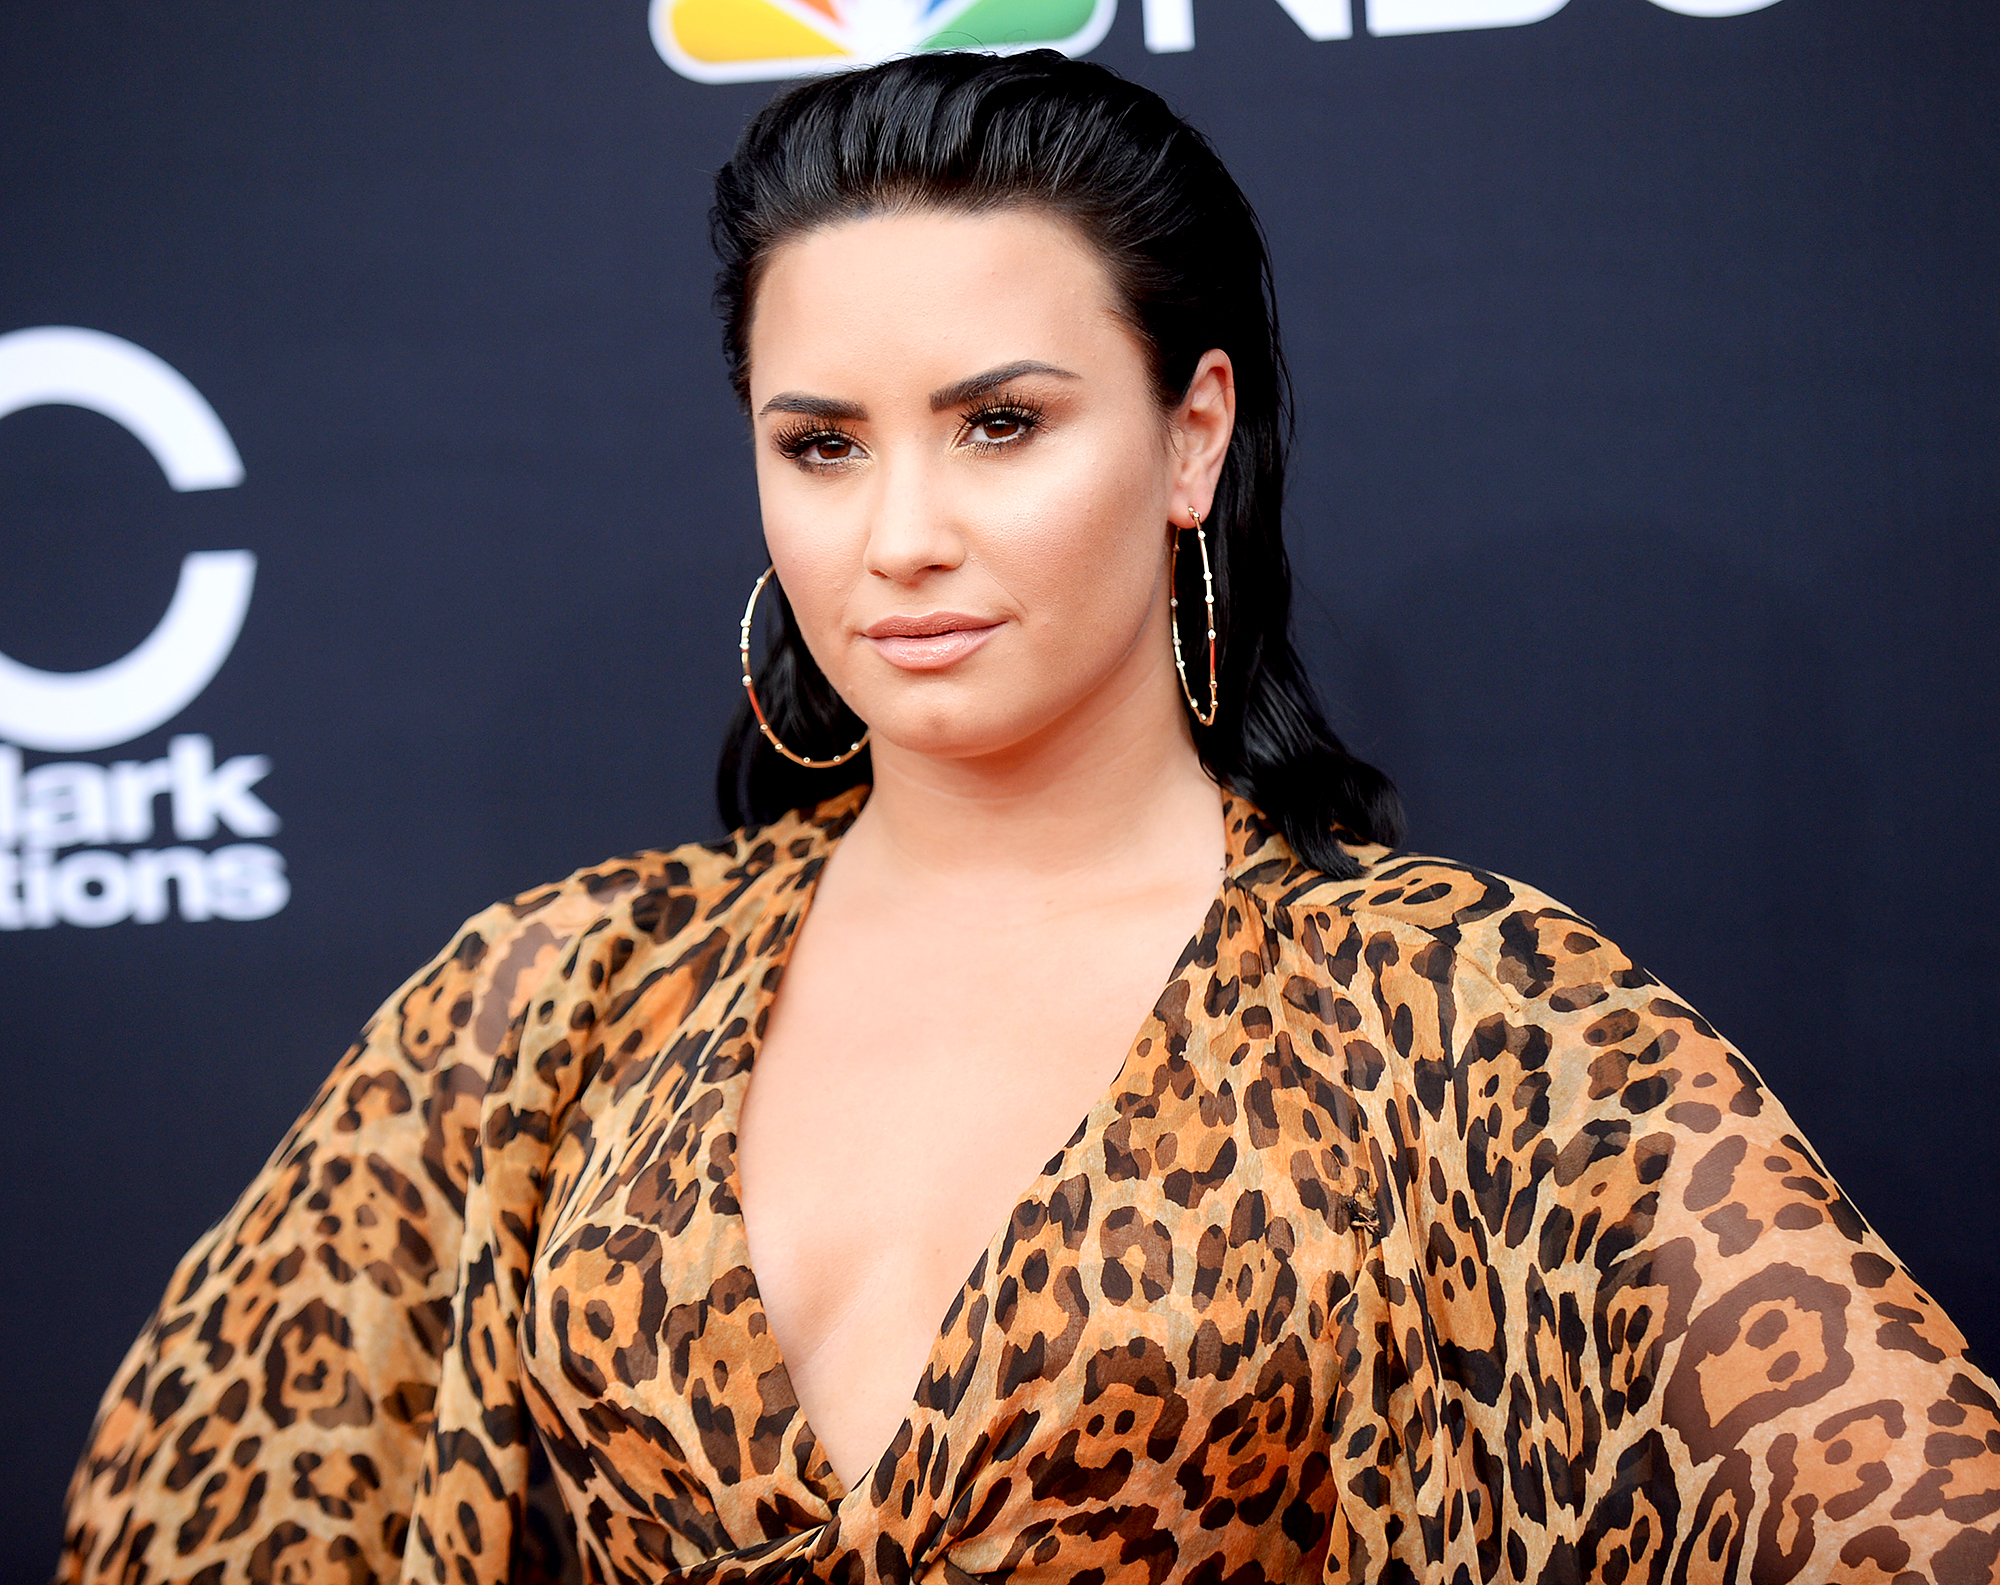 VMAs 2019: Demi Lovato Explains Why She Didn’t Attend